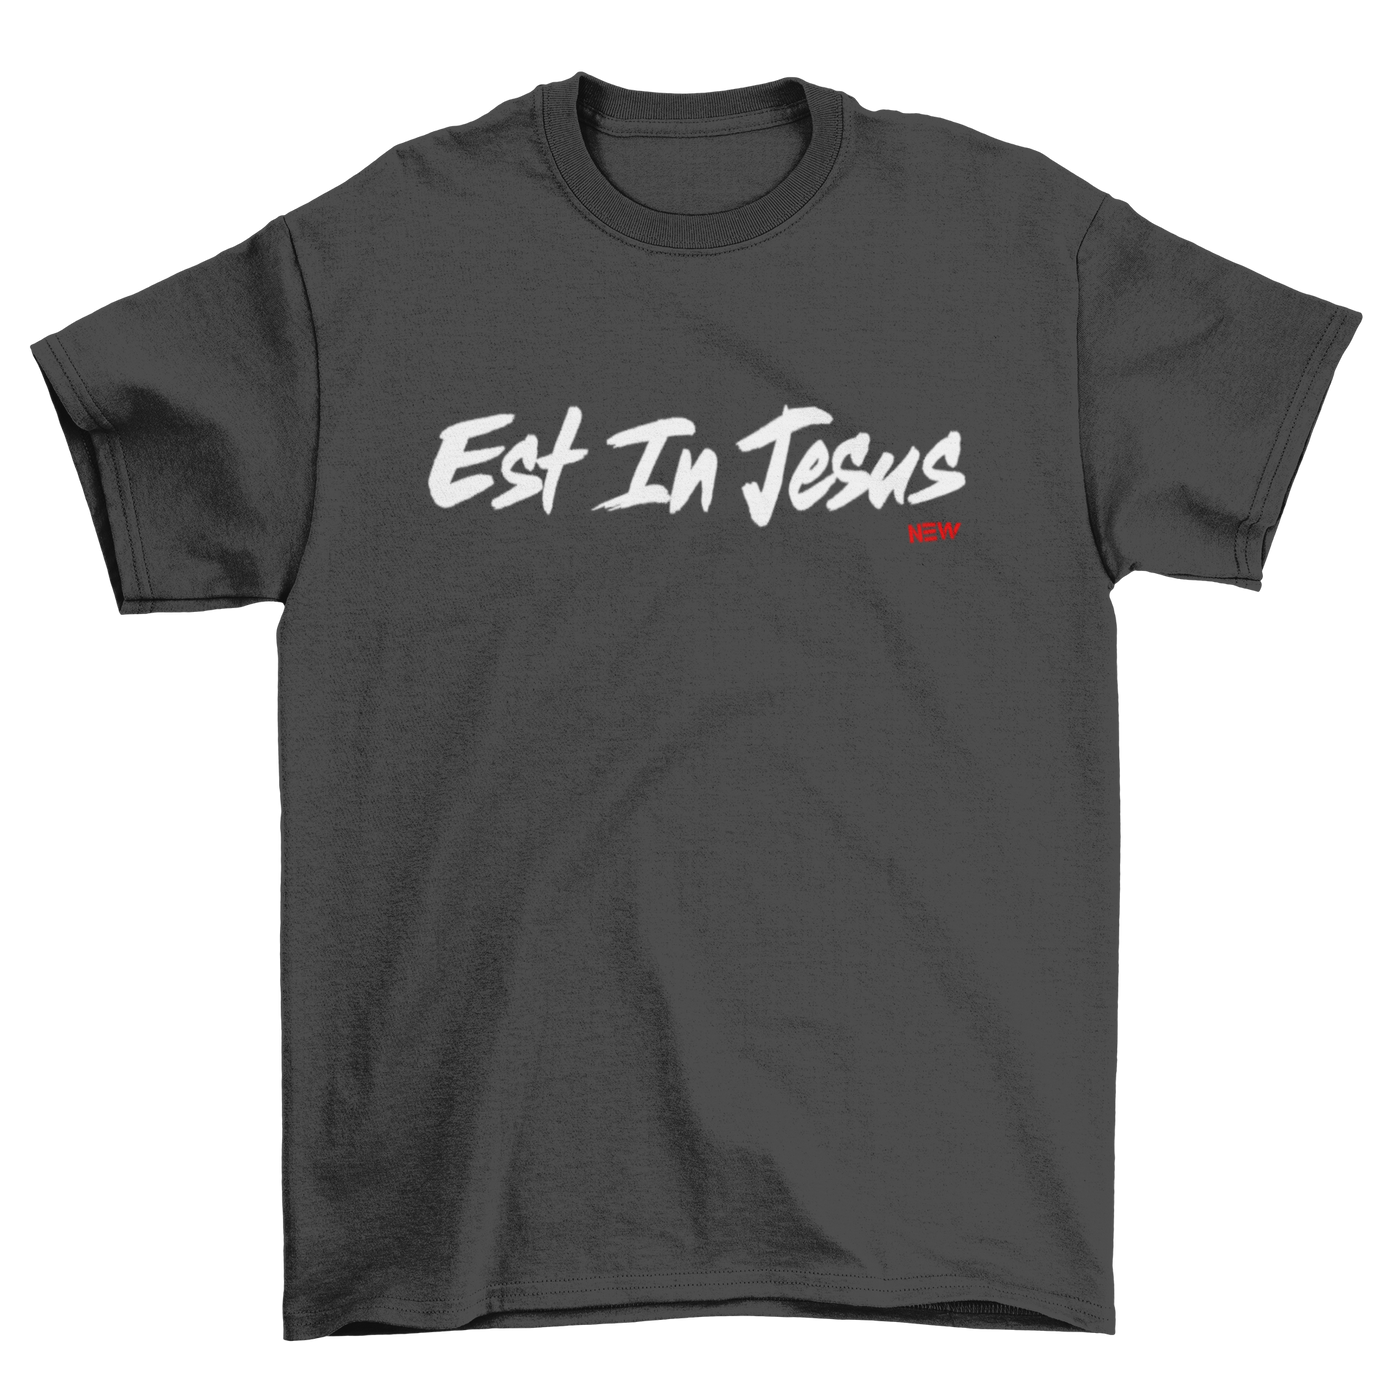 EST IN JESUS - T-Shirt